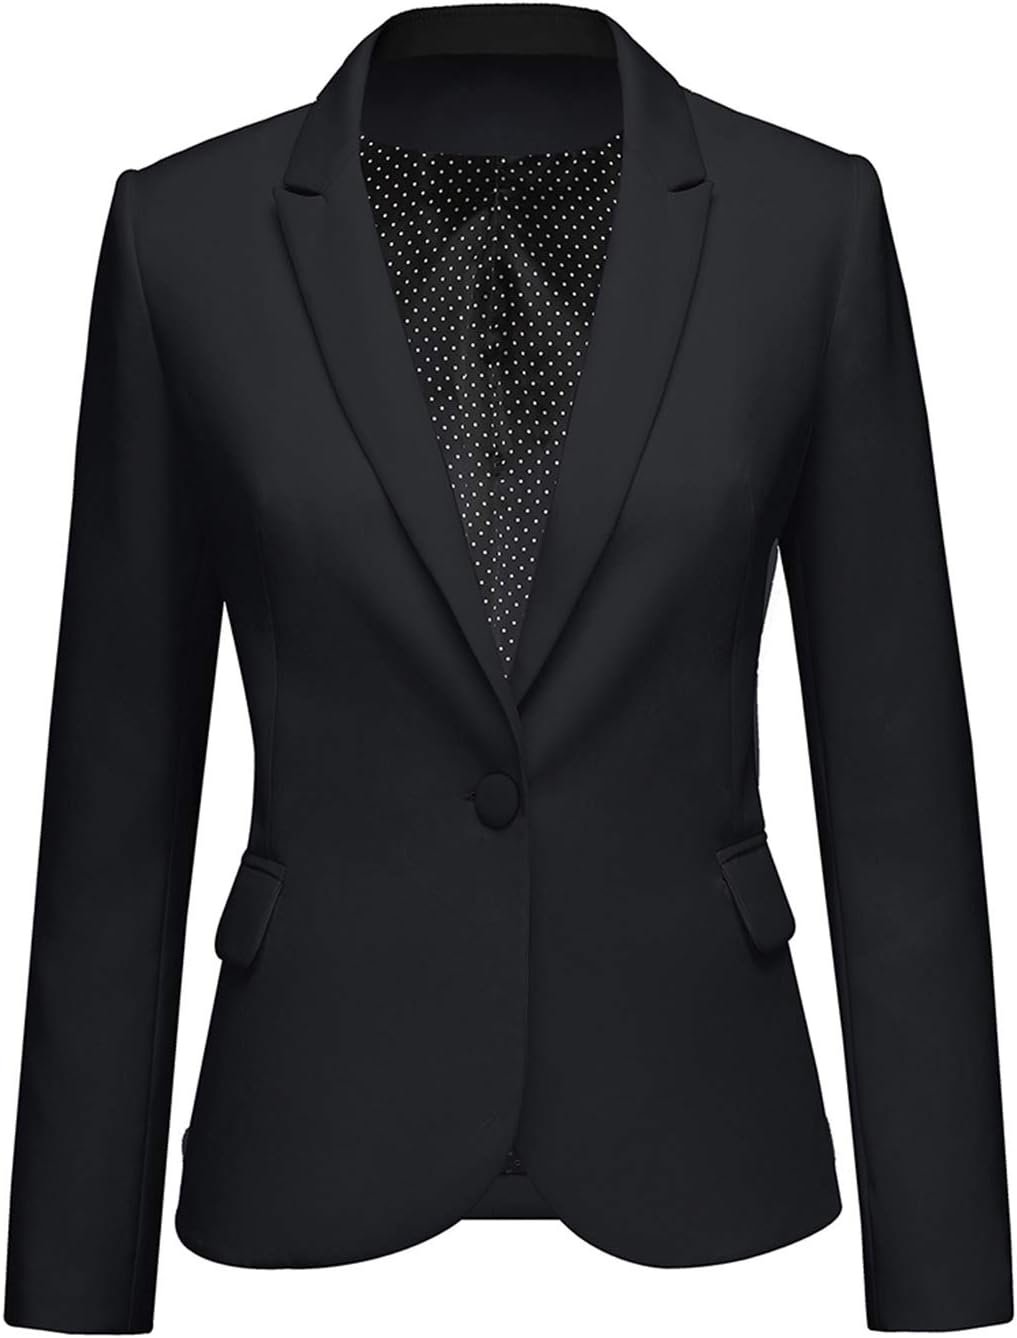 GRAPENT Womens Business Casual Pockets Work Office Blazer Back Slit Jacket Suit